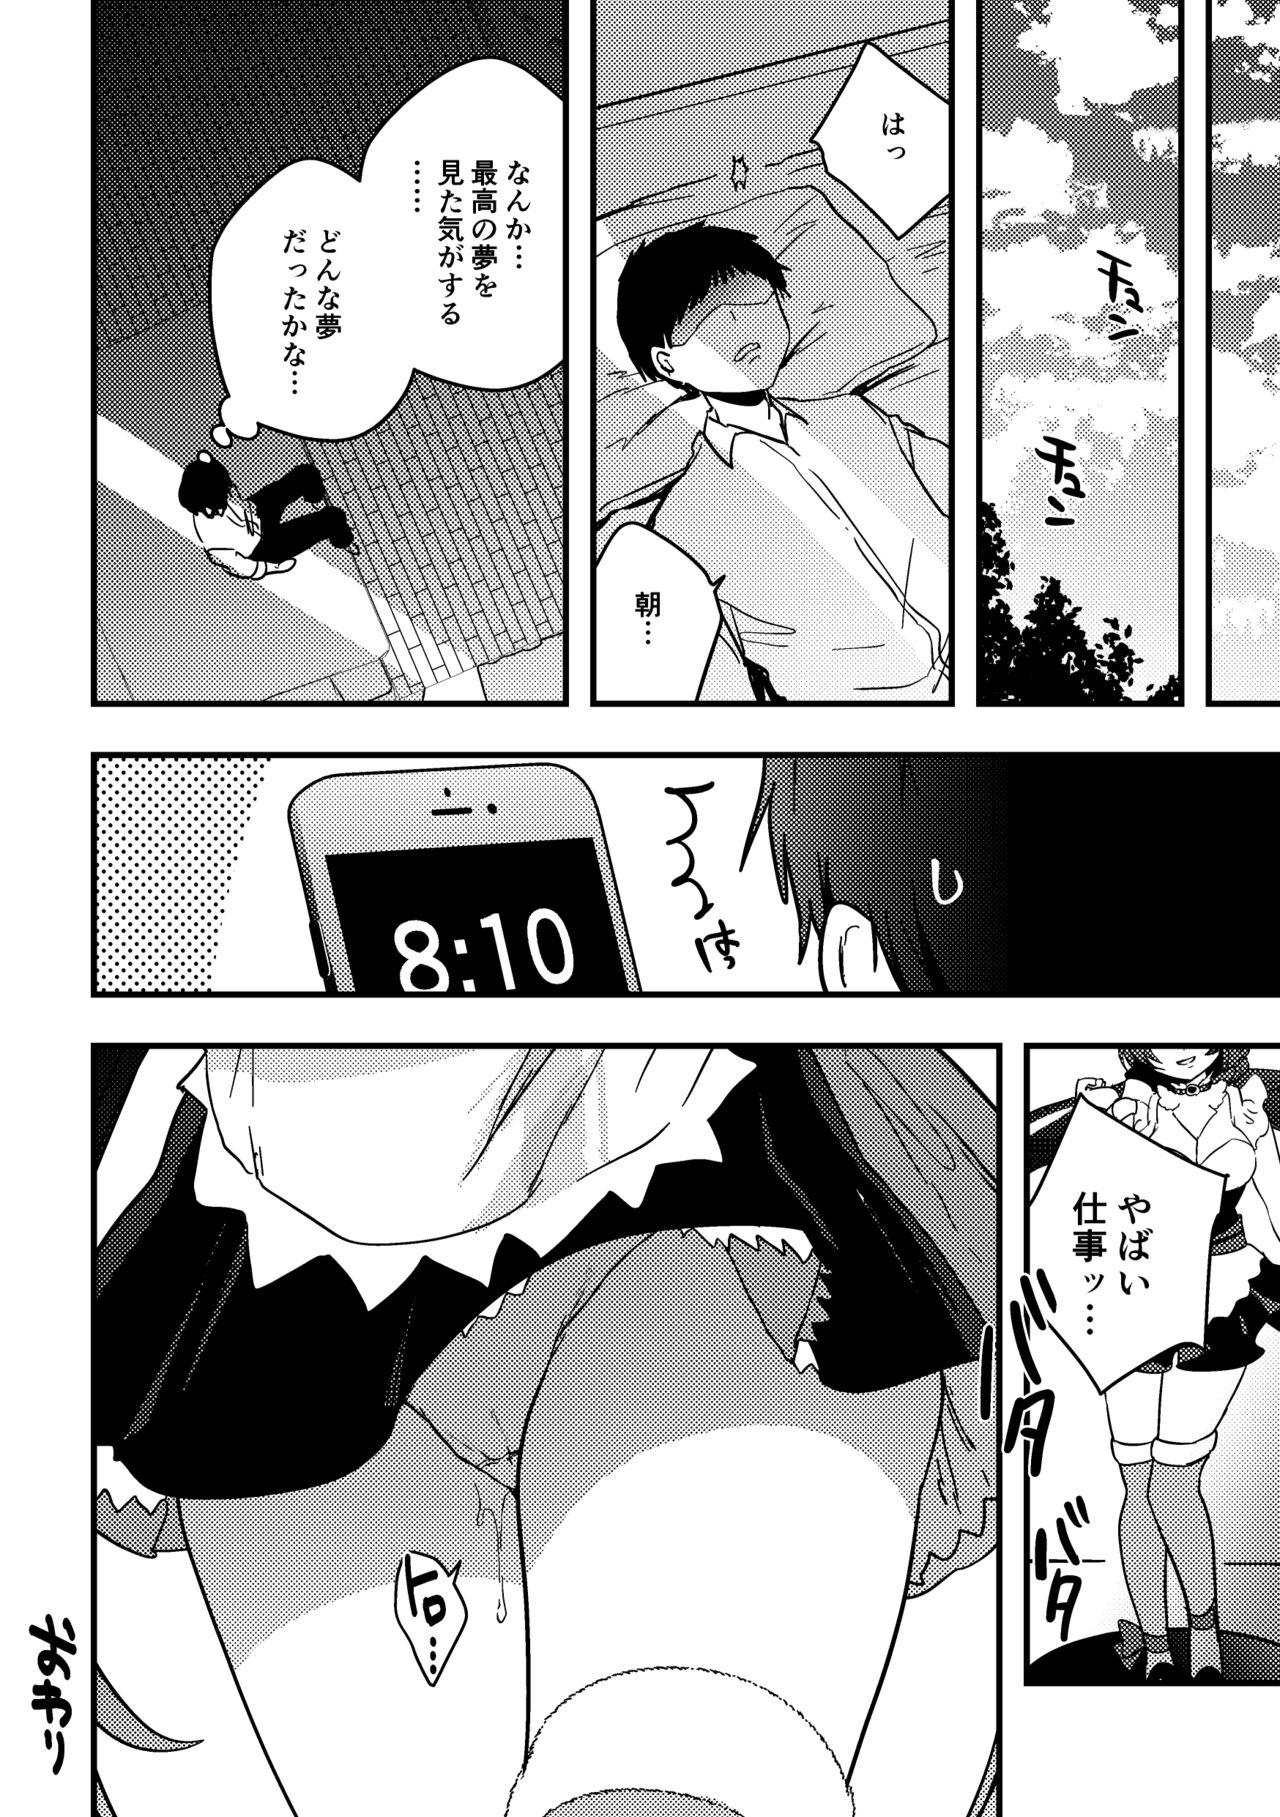 Nontan Valentine Manga 11